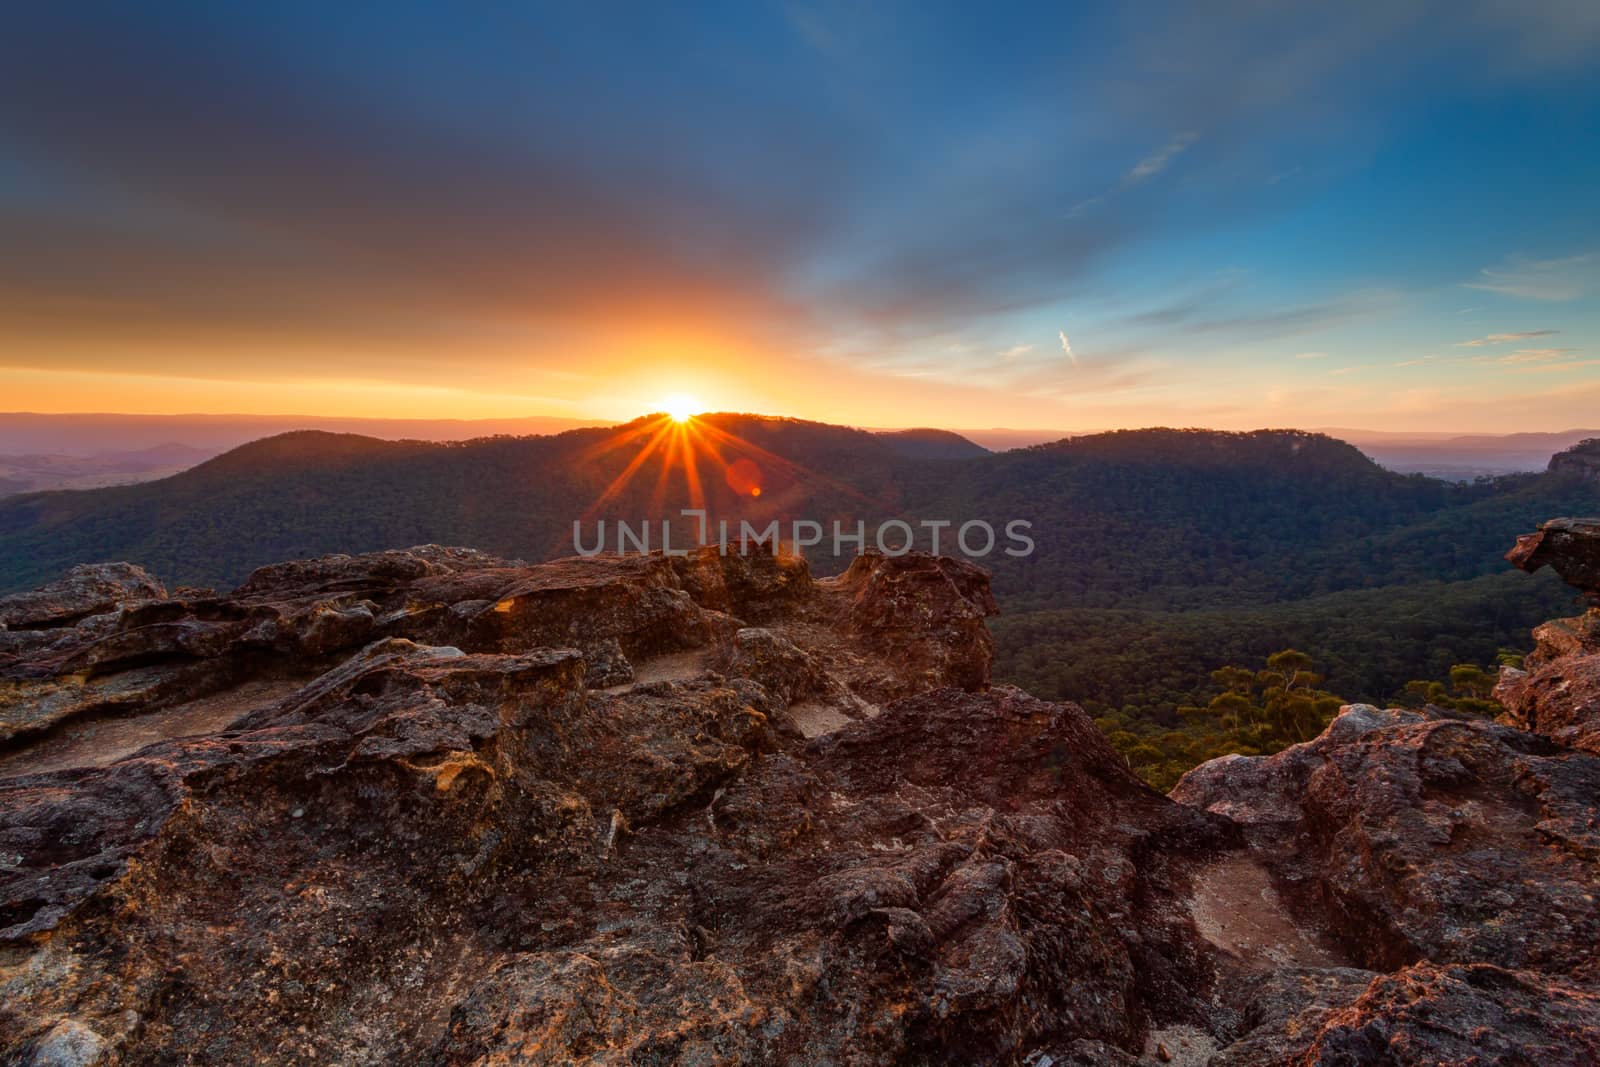 Sunset over the Blue Mountains escarpment ranges by lovleah